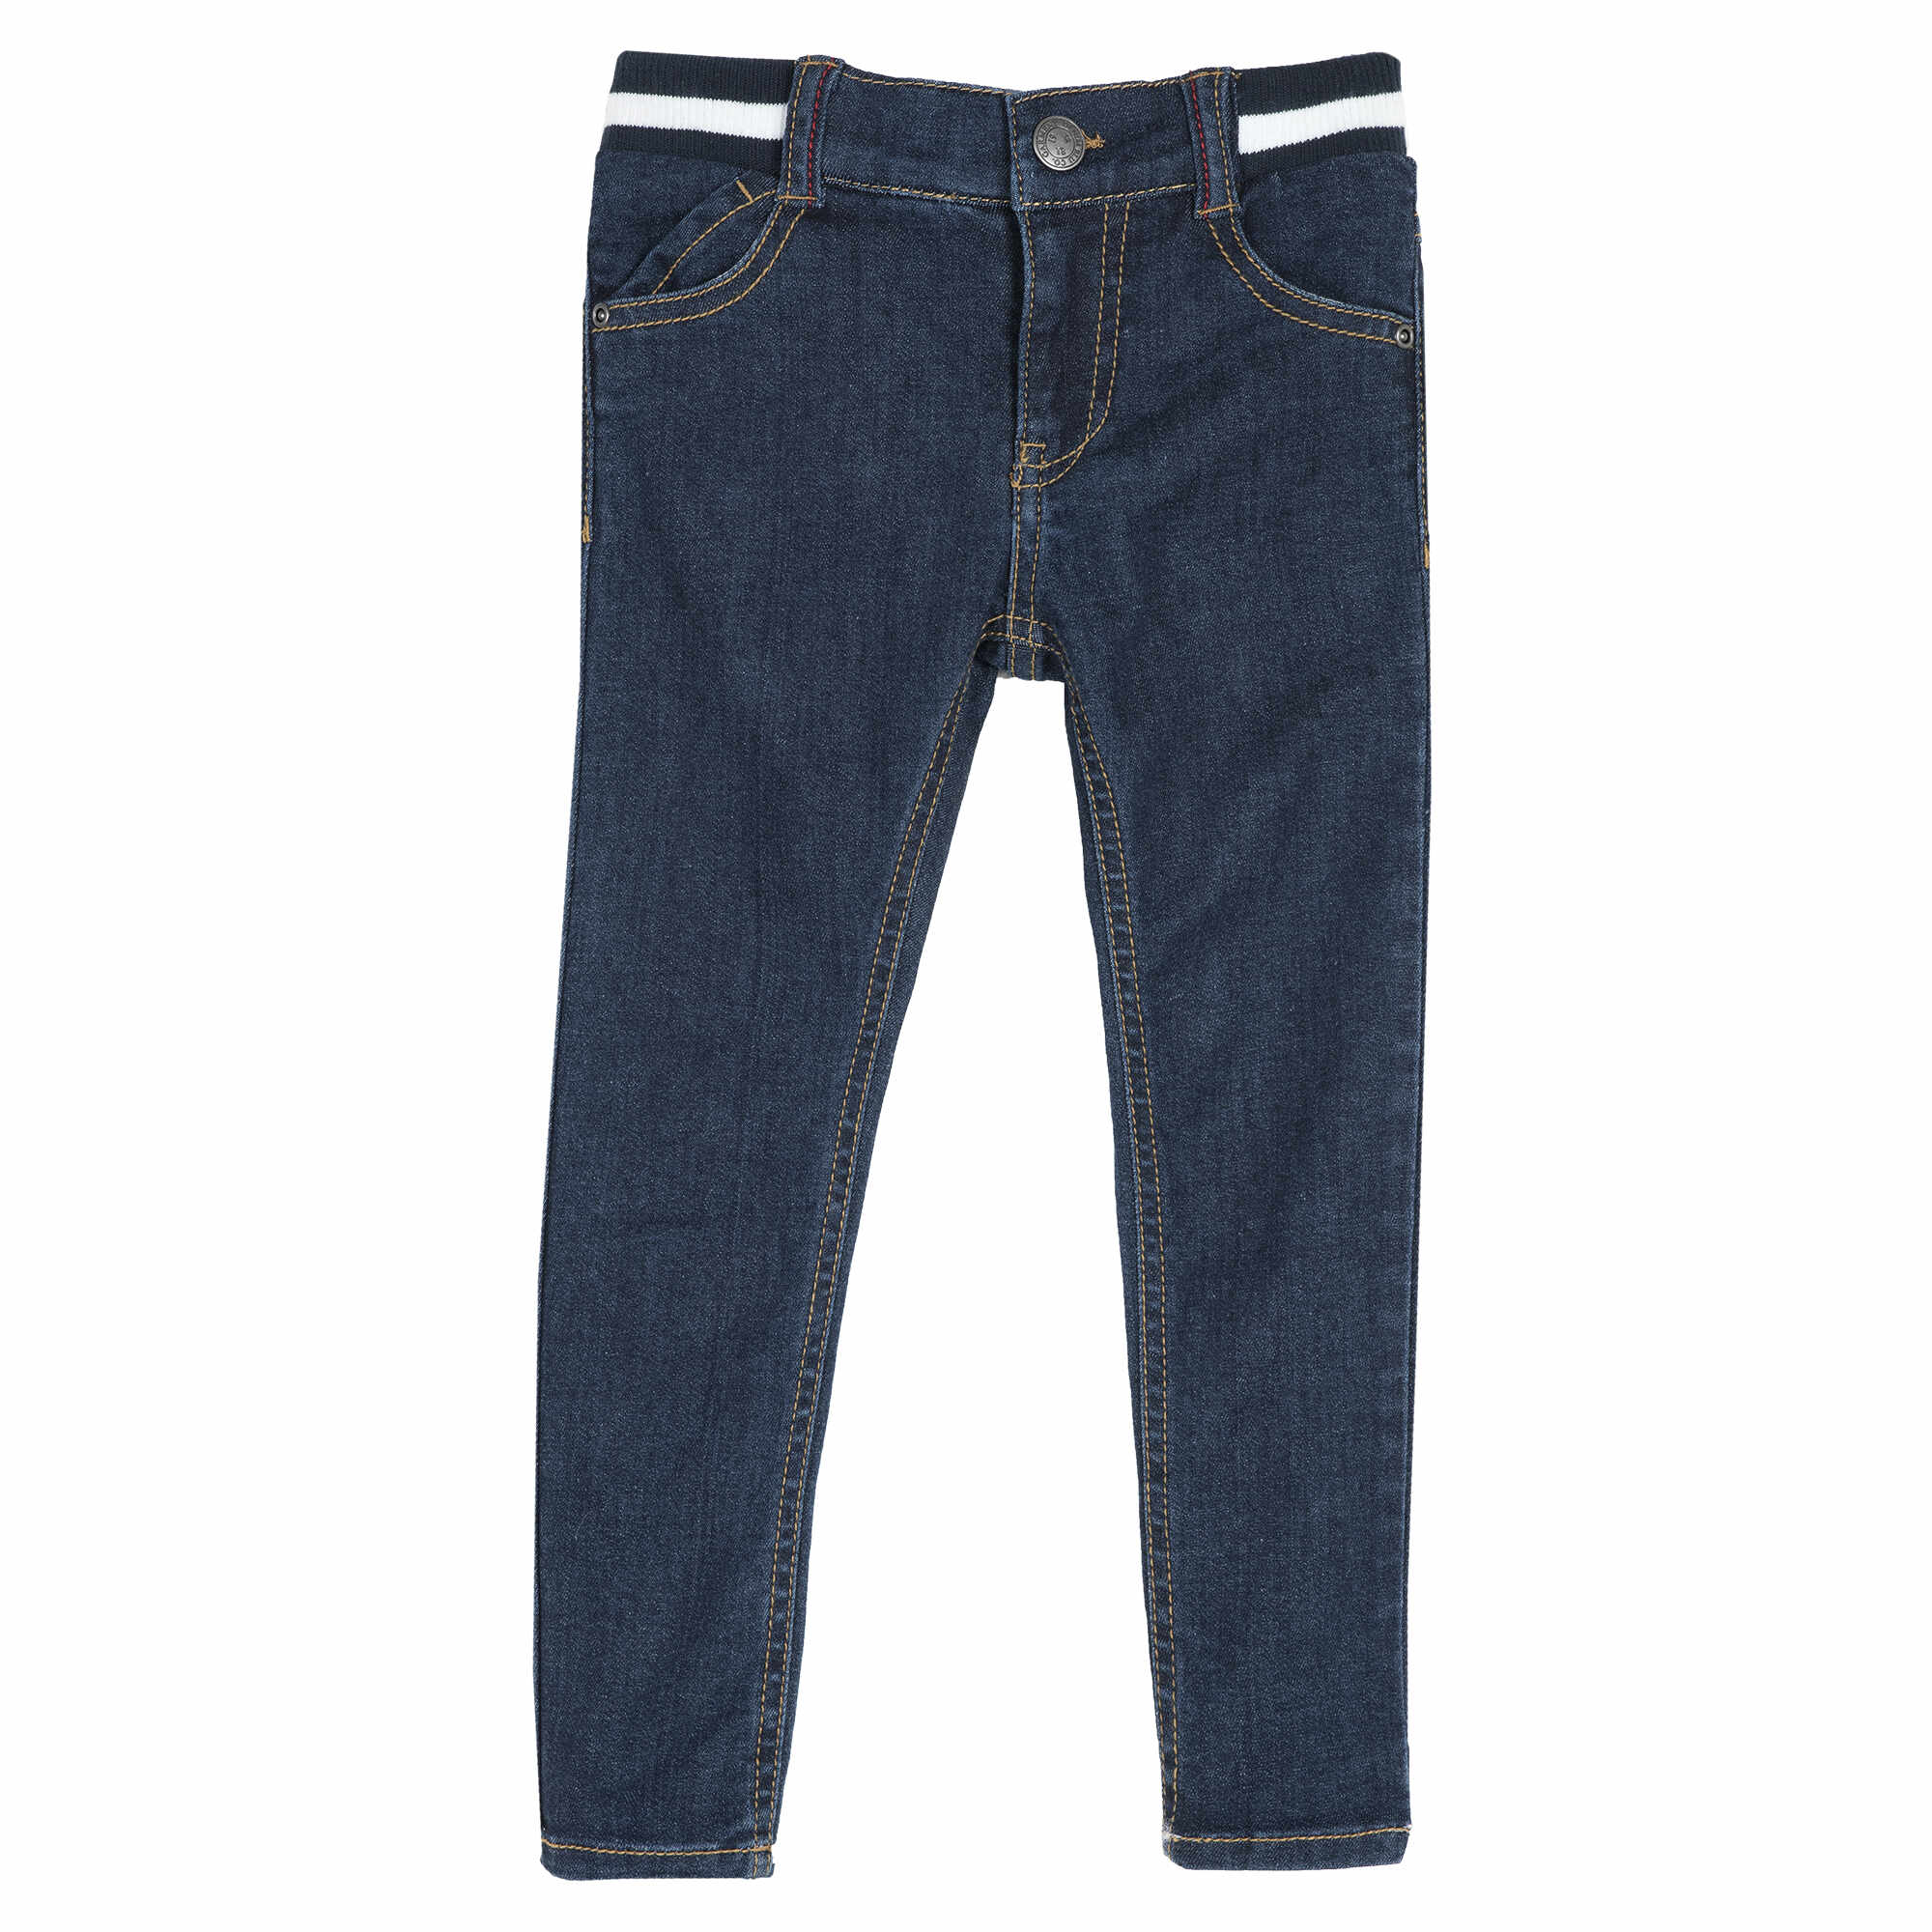 Pantalon lung copii Chicco, albastru inchis, 24955